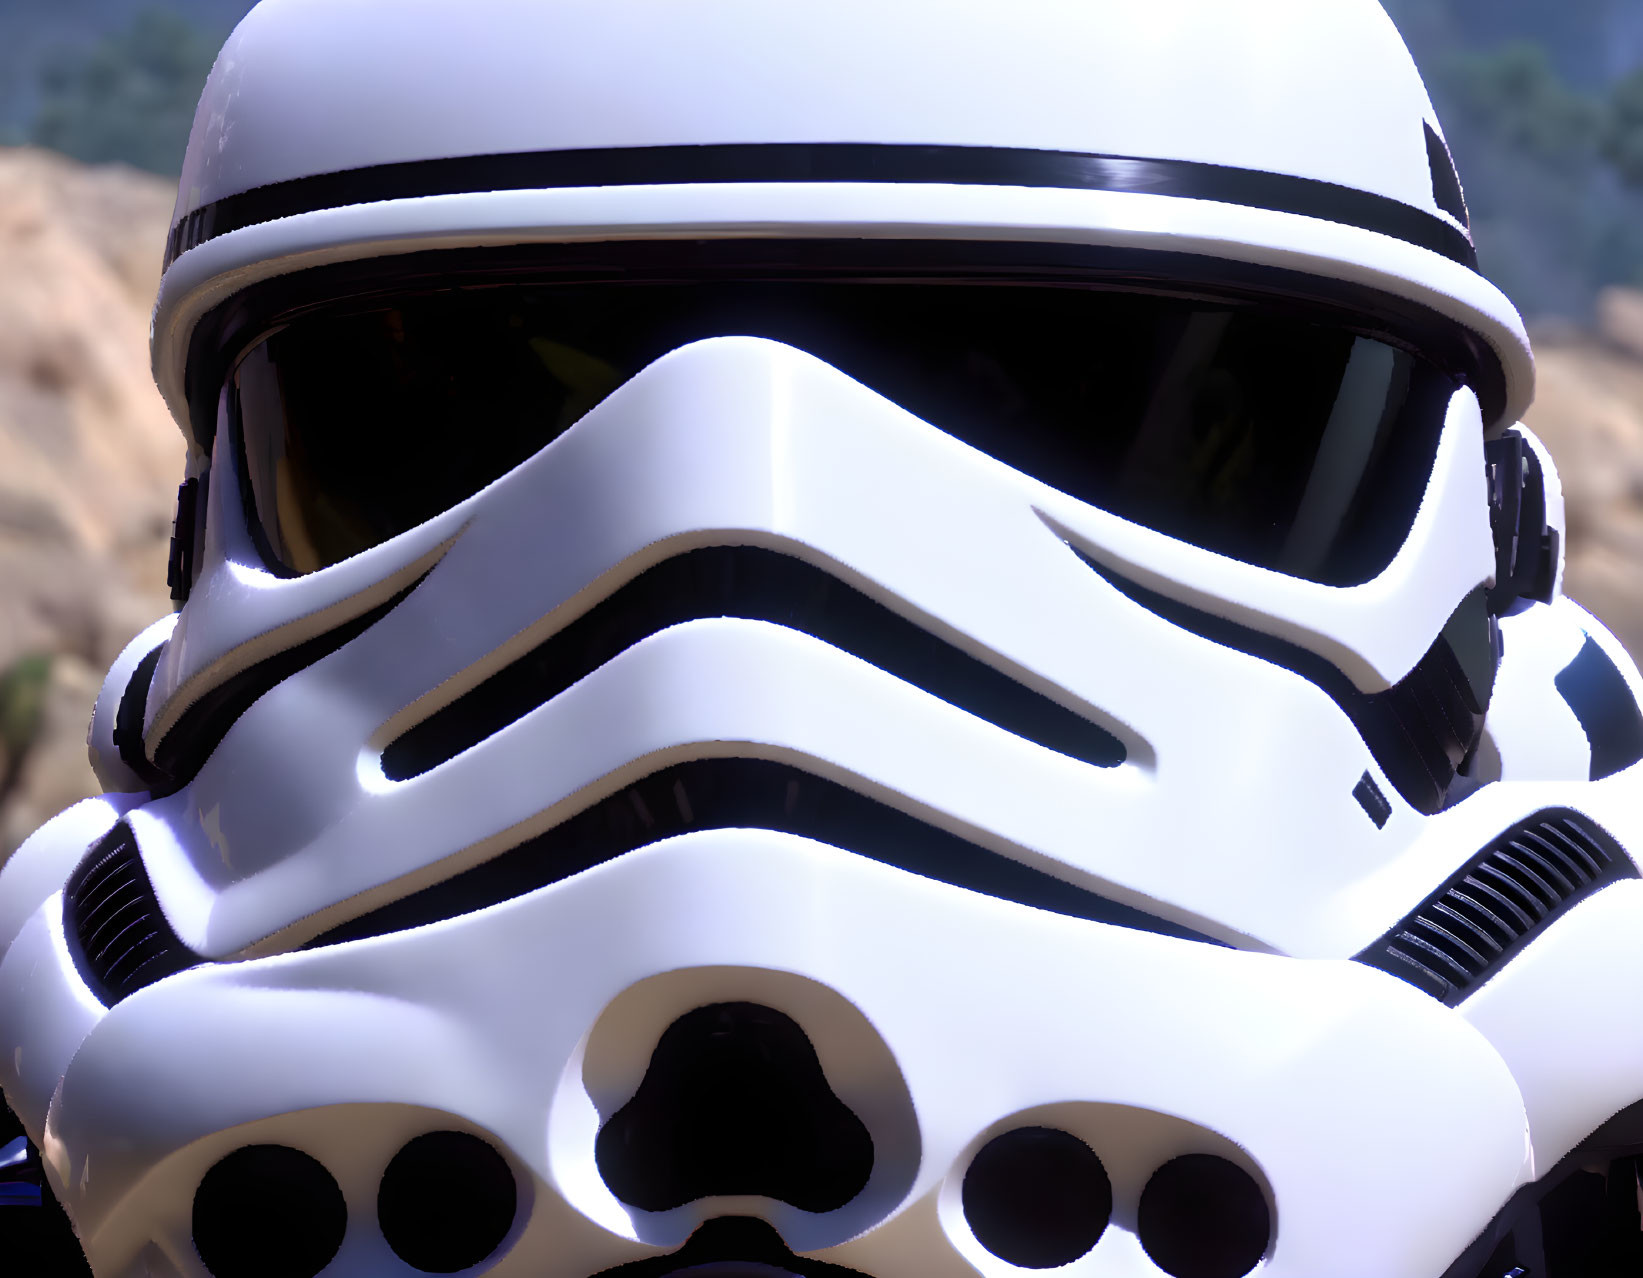 Detailed Stormtrooper Helmet Against Blurred Background